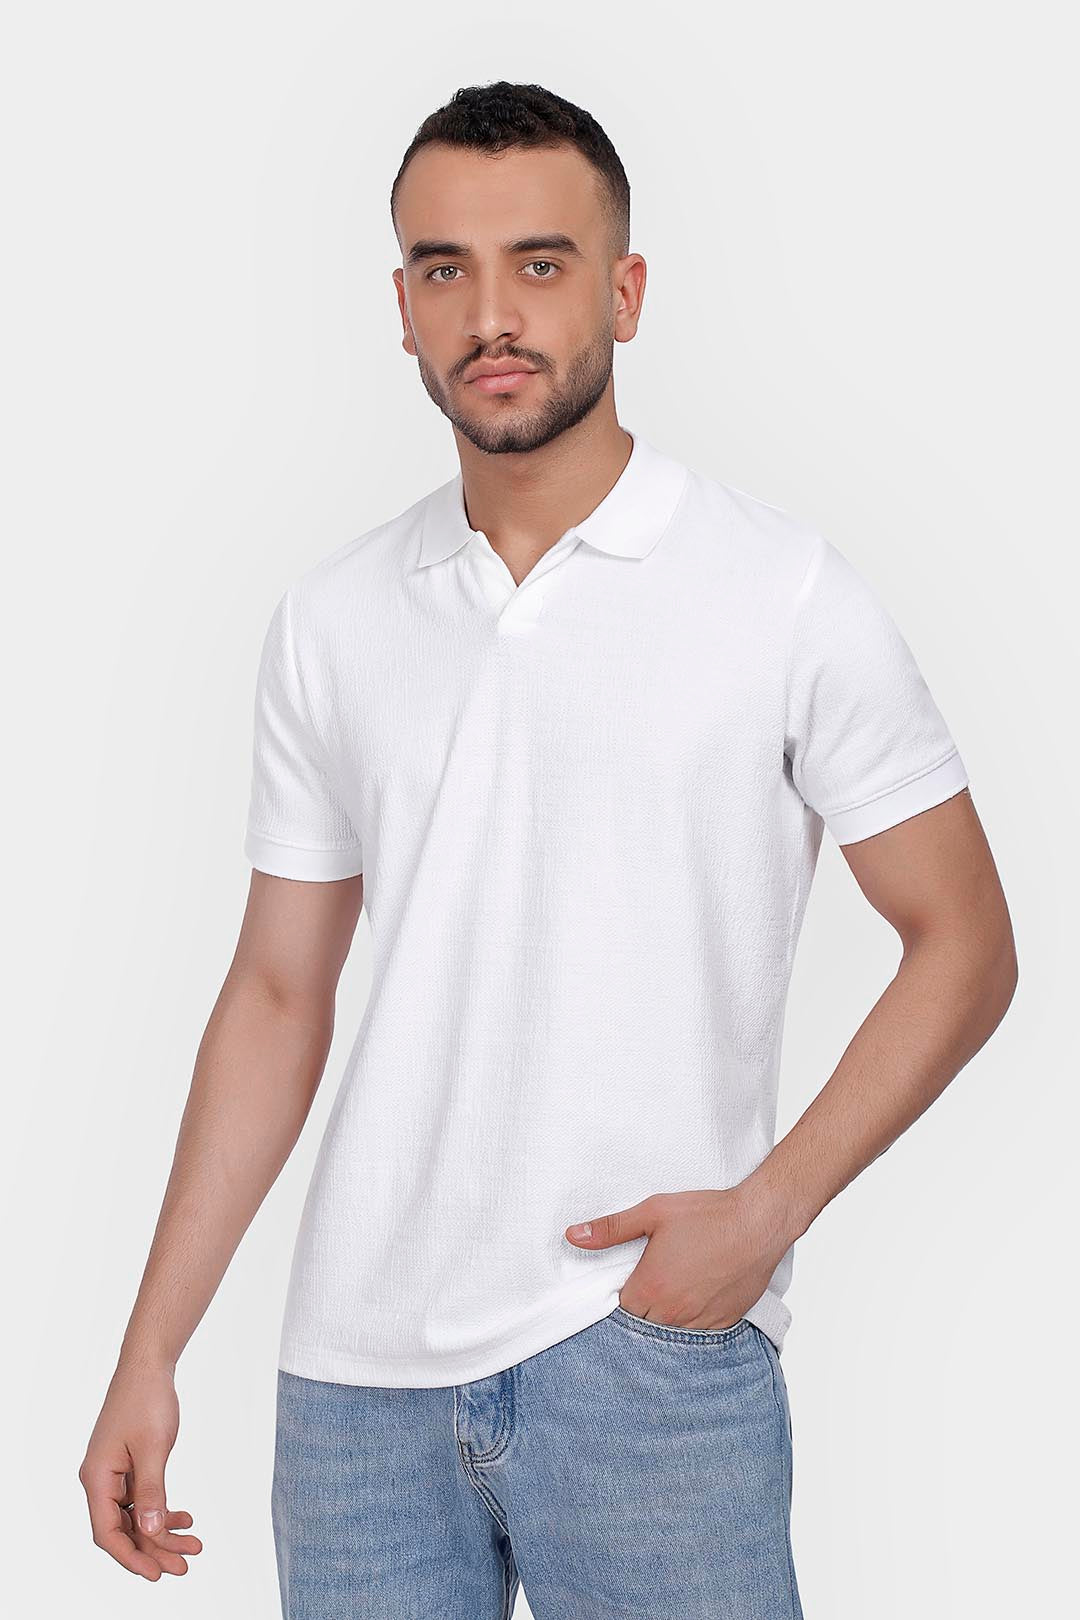 White Basic  Polo Shirt